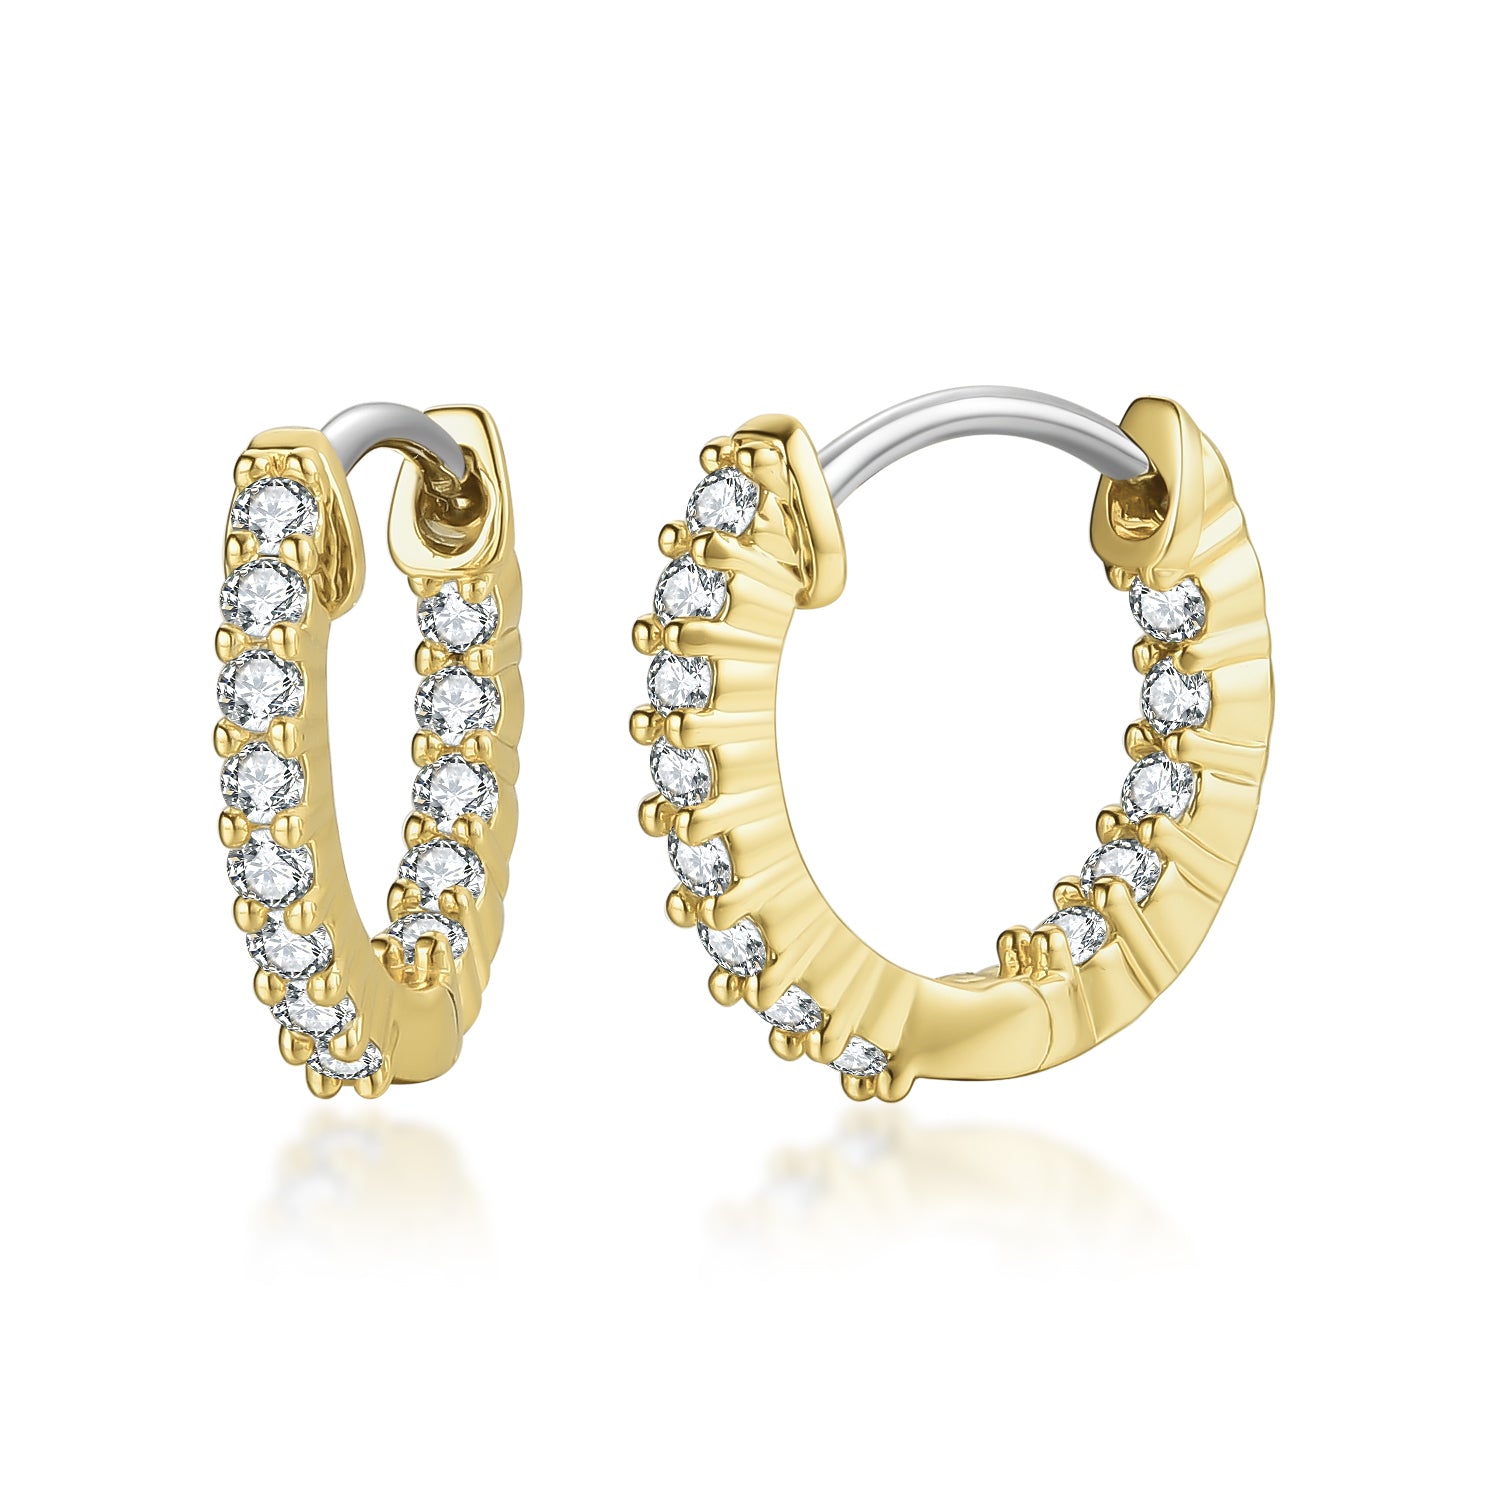 Surgical Steel Gold Plated CZ Hoop Earrings - HK Jewels